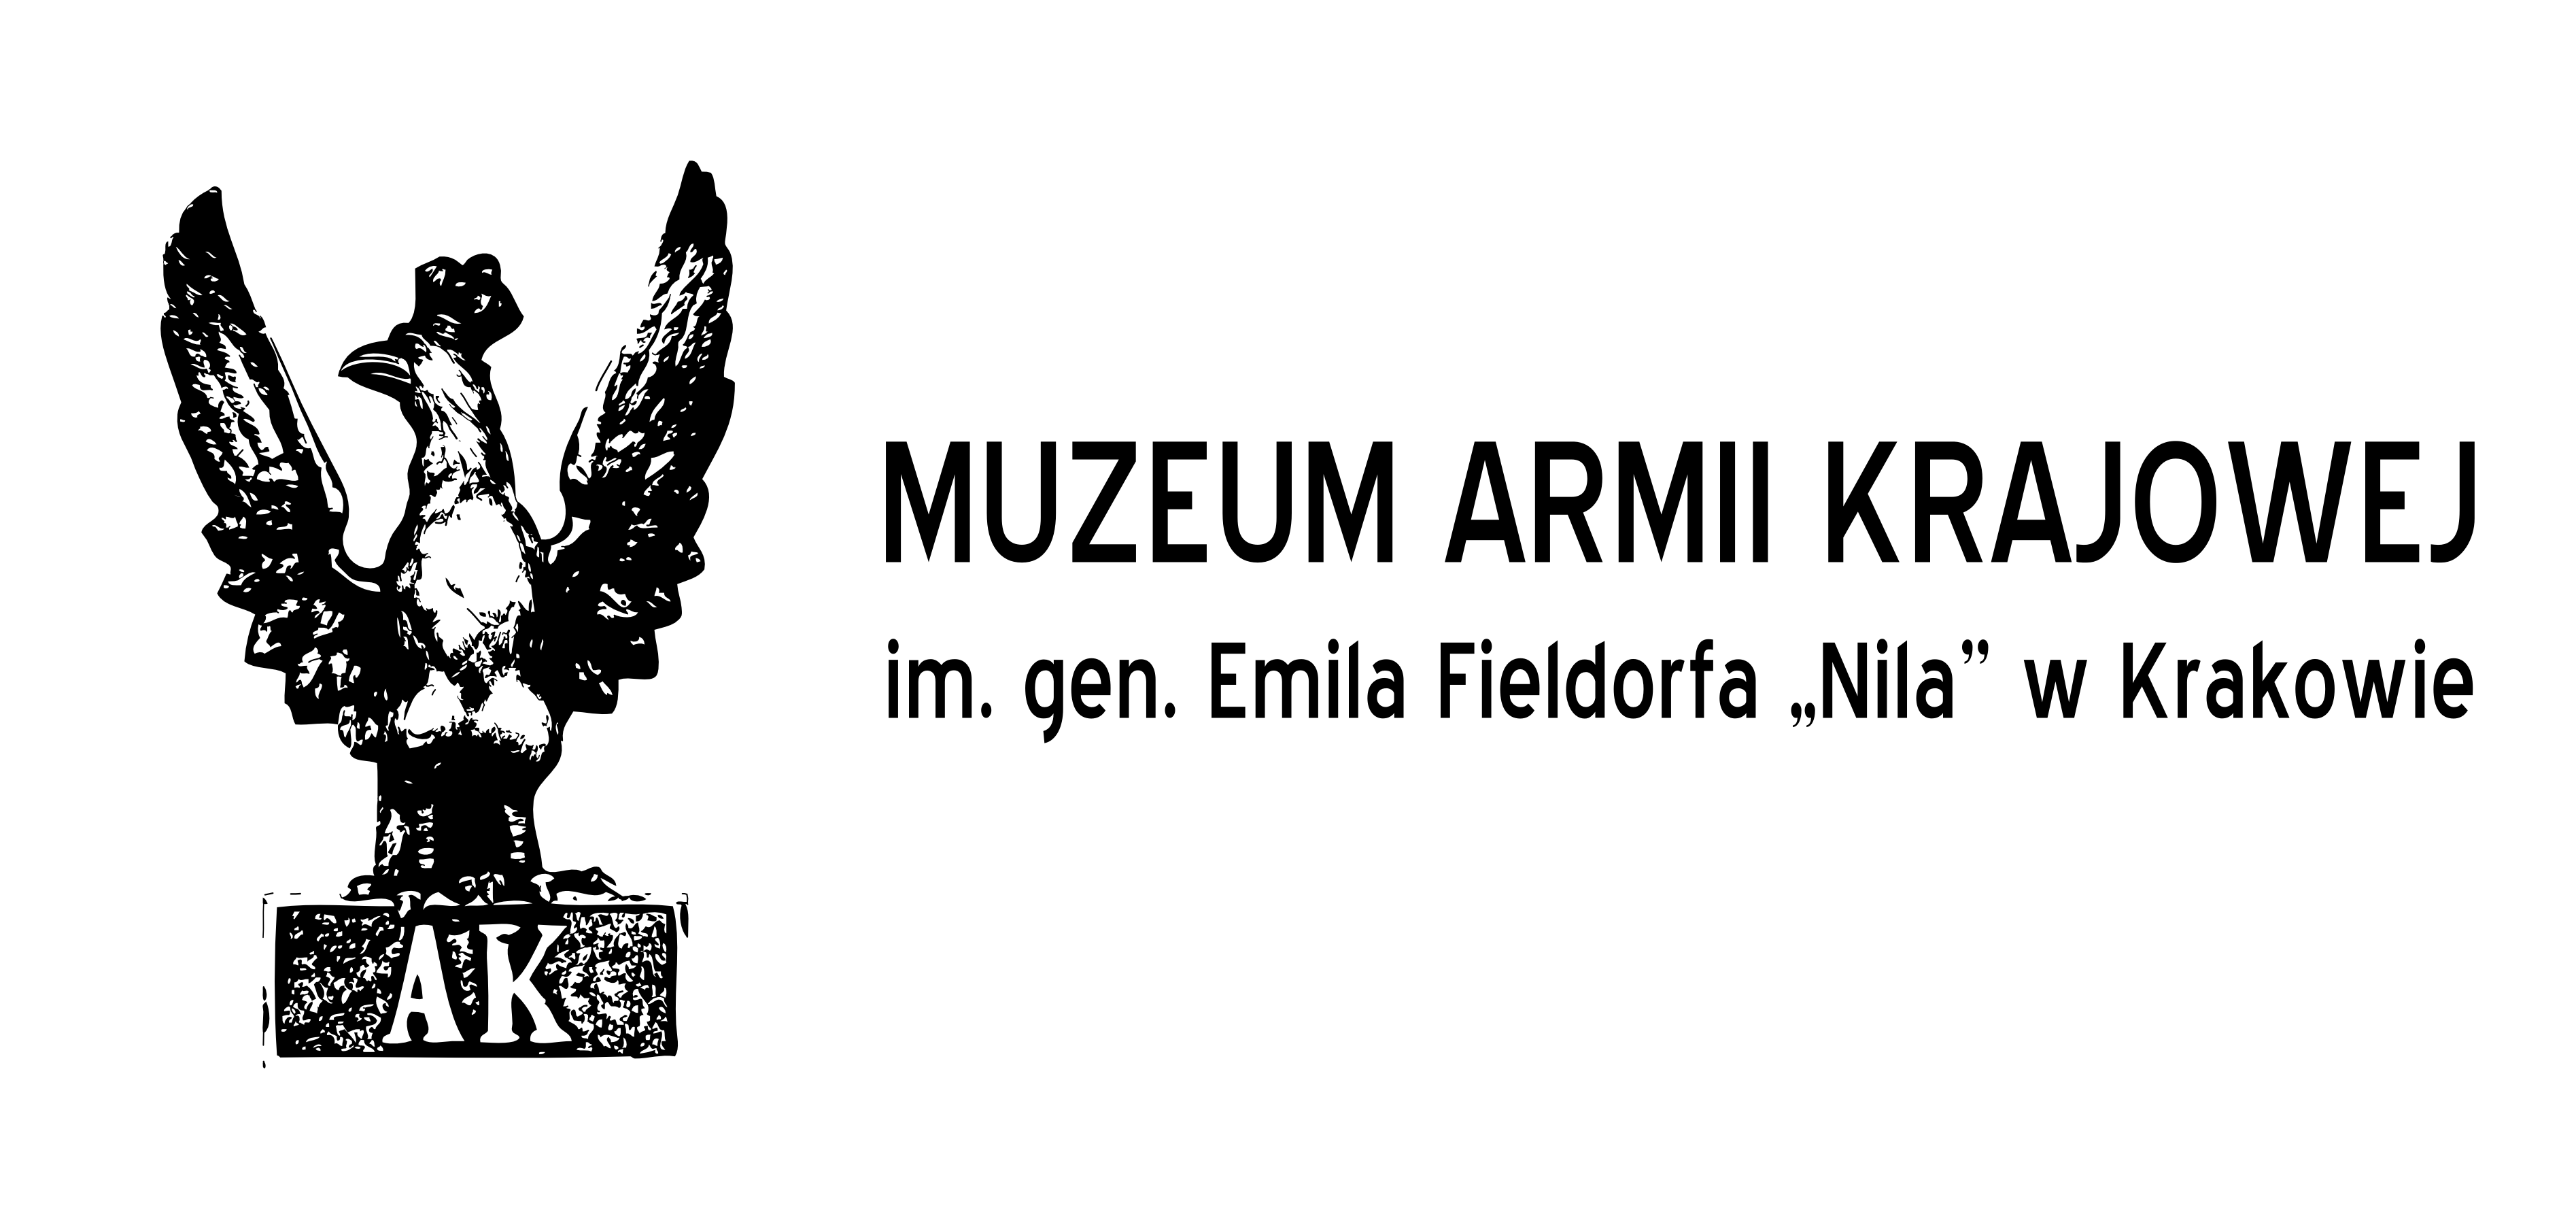 MAK logo wektory + napis